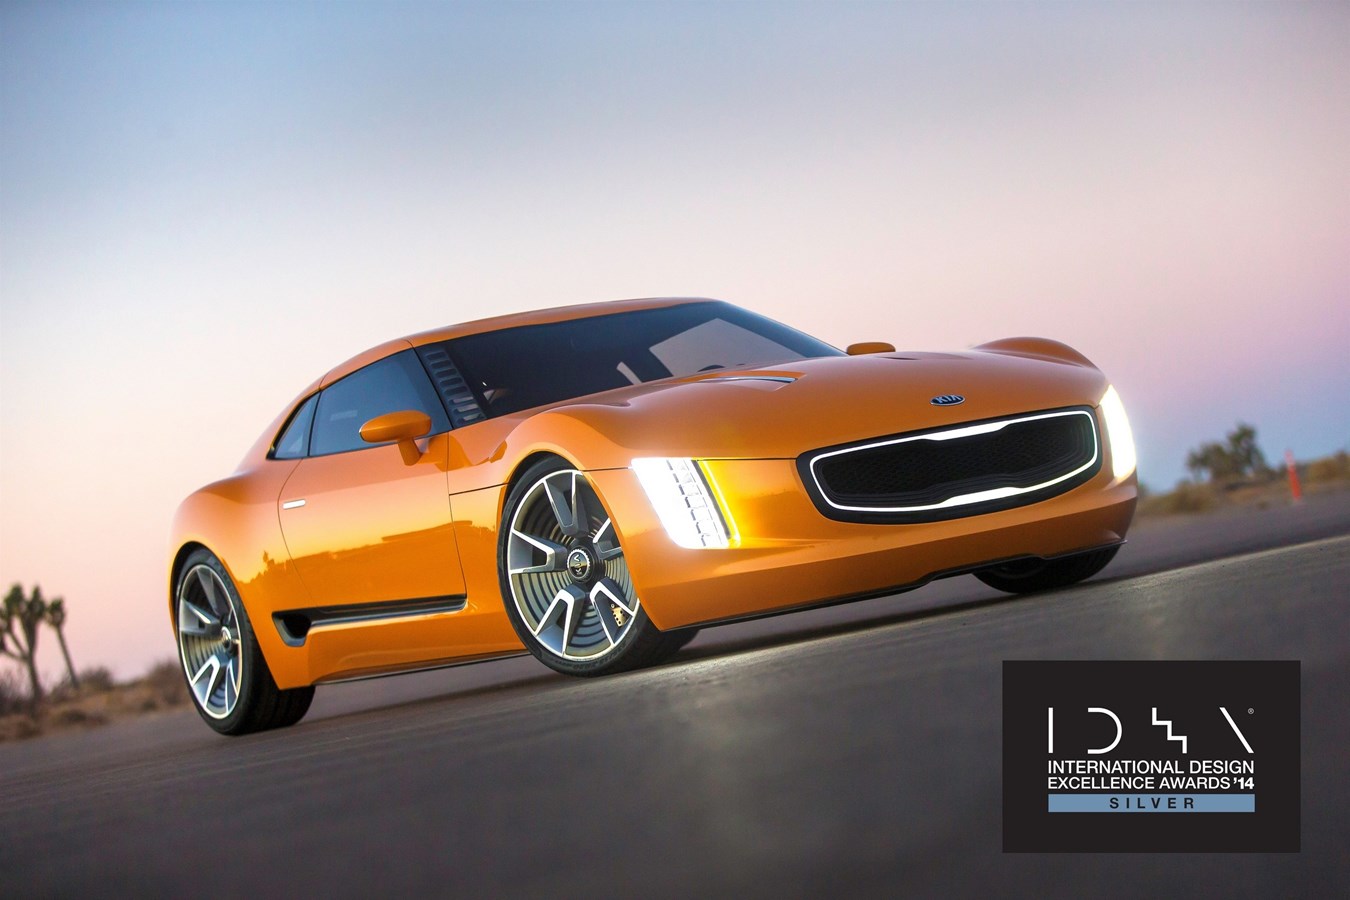 Kia receives IDEA Silver for the sleekly sculpted GT4 Stinger concept car